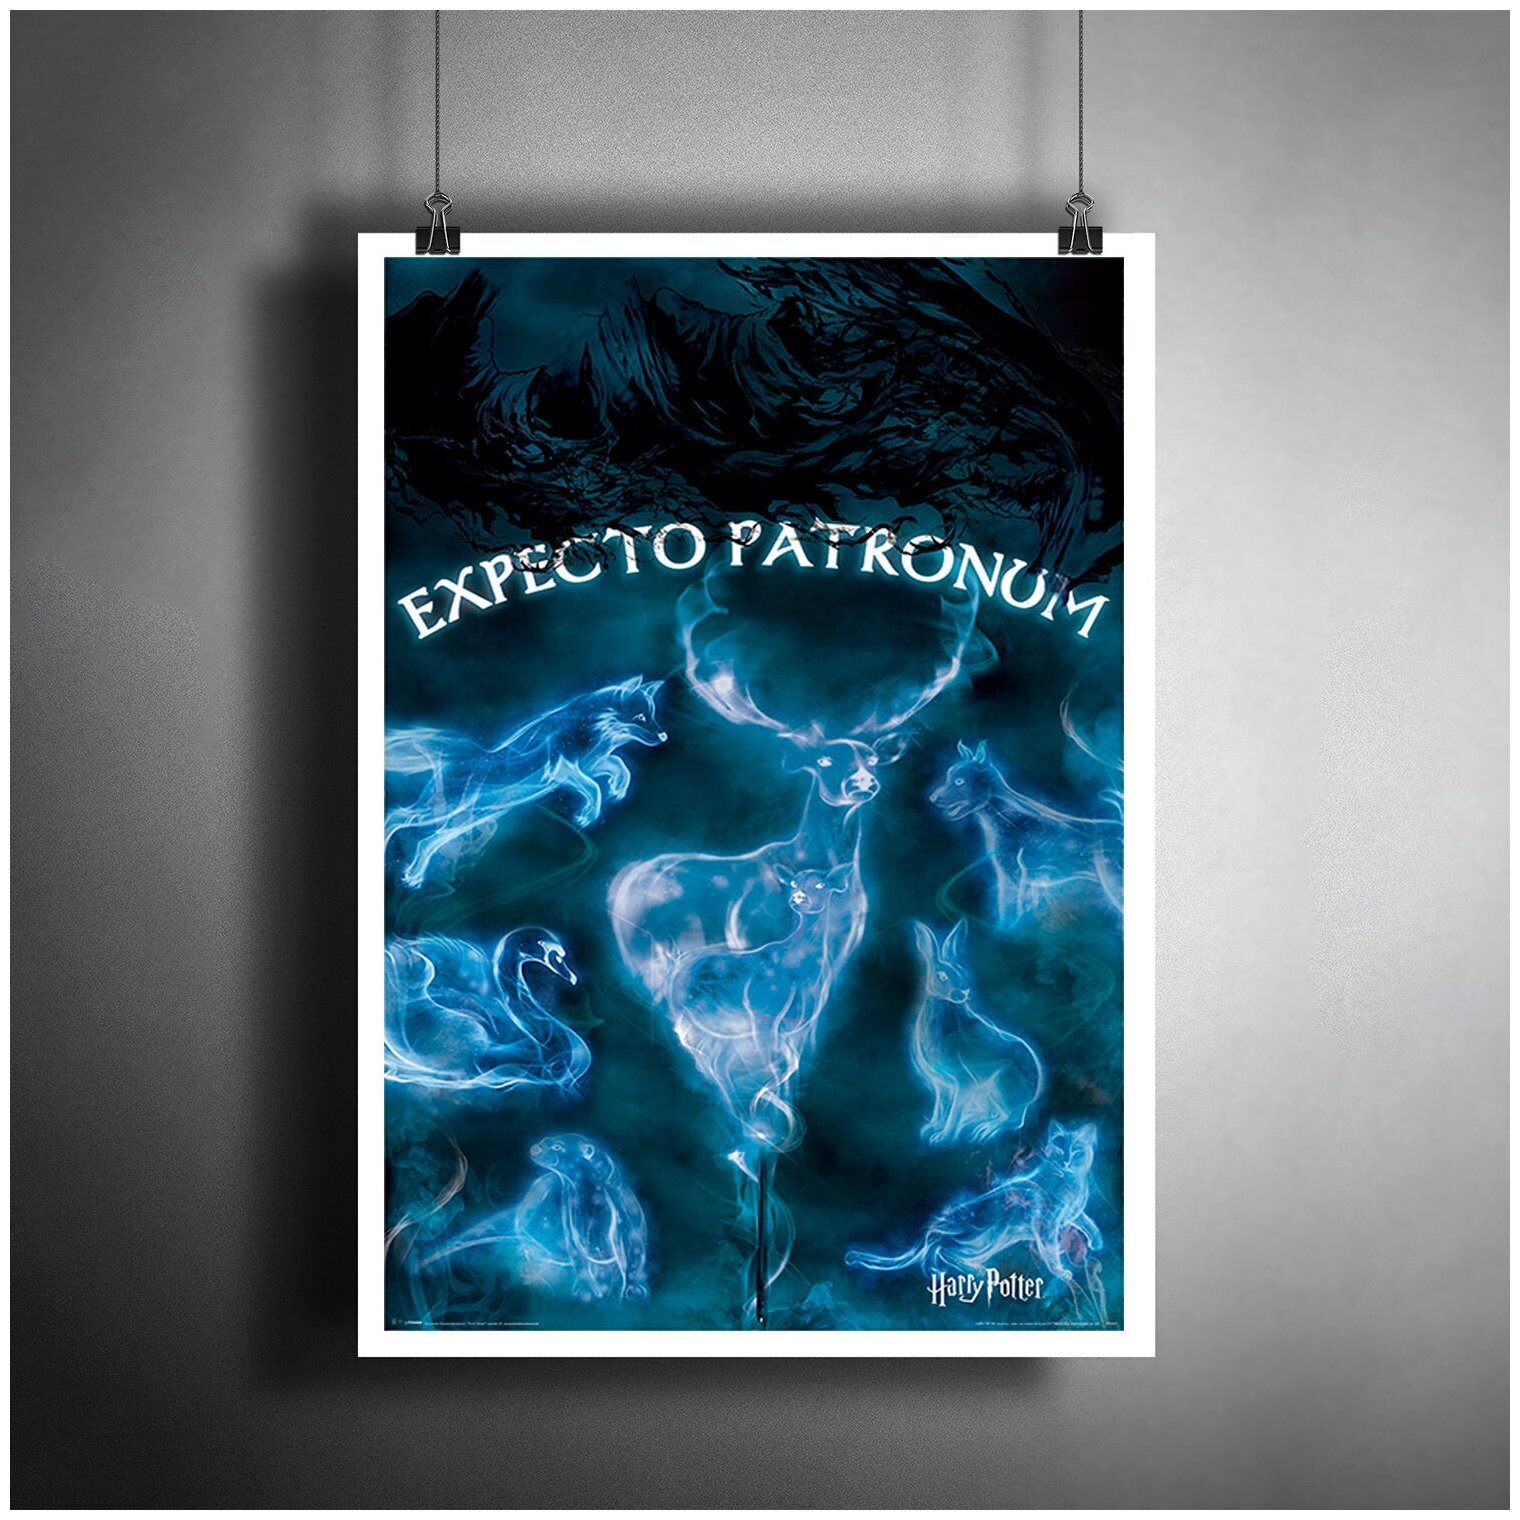 Постер плакат для интерьера "Фильм книга Дж. К. Роулинг: Гарри Поттер. Экспекто Патронум. Harry Potter"/ Декор дома офиса комнаты A3 (297 x 420 мм)